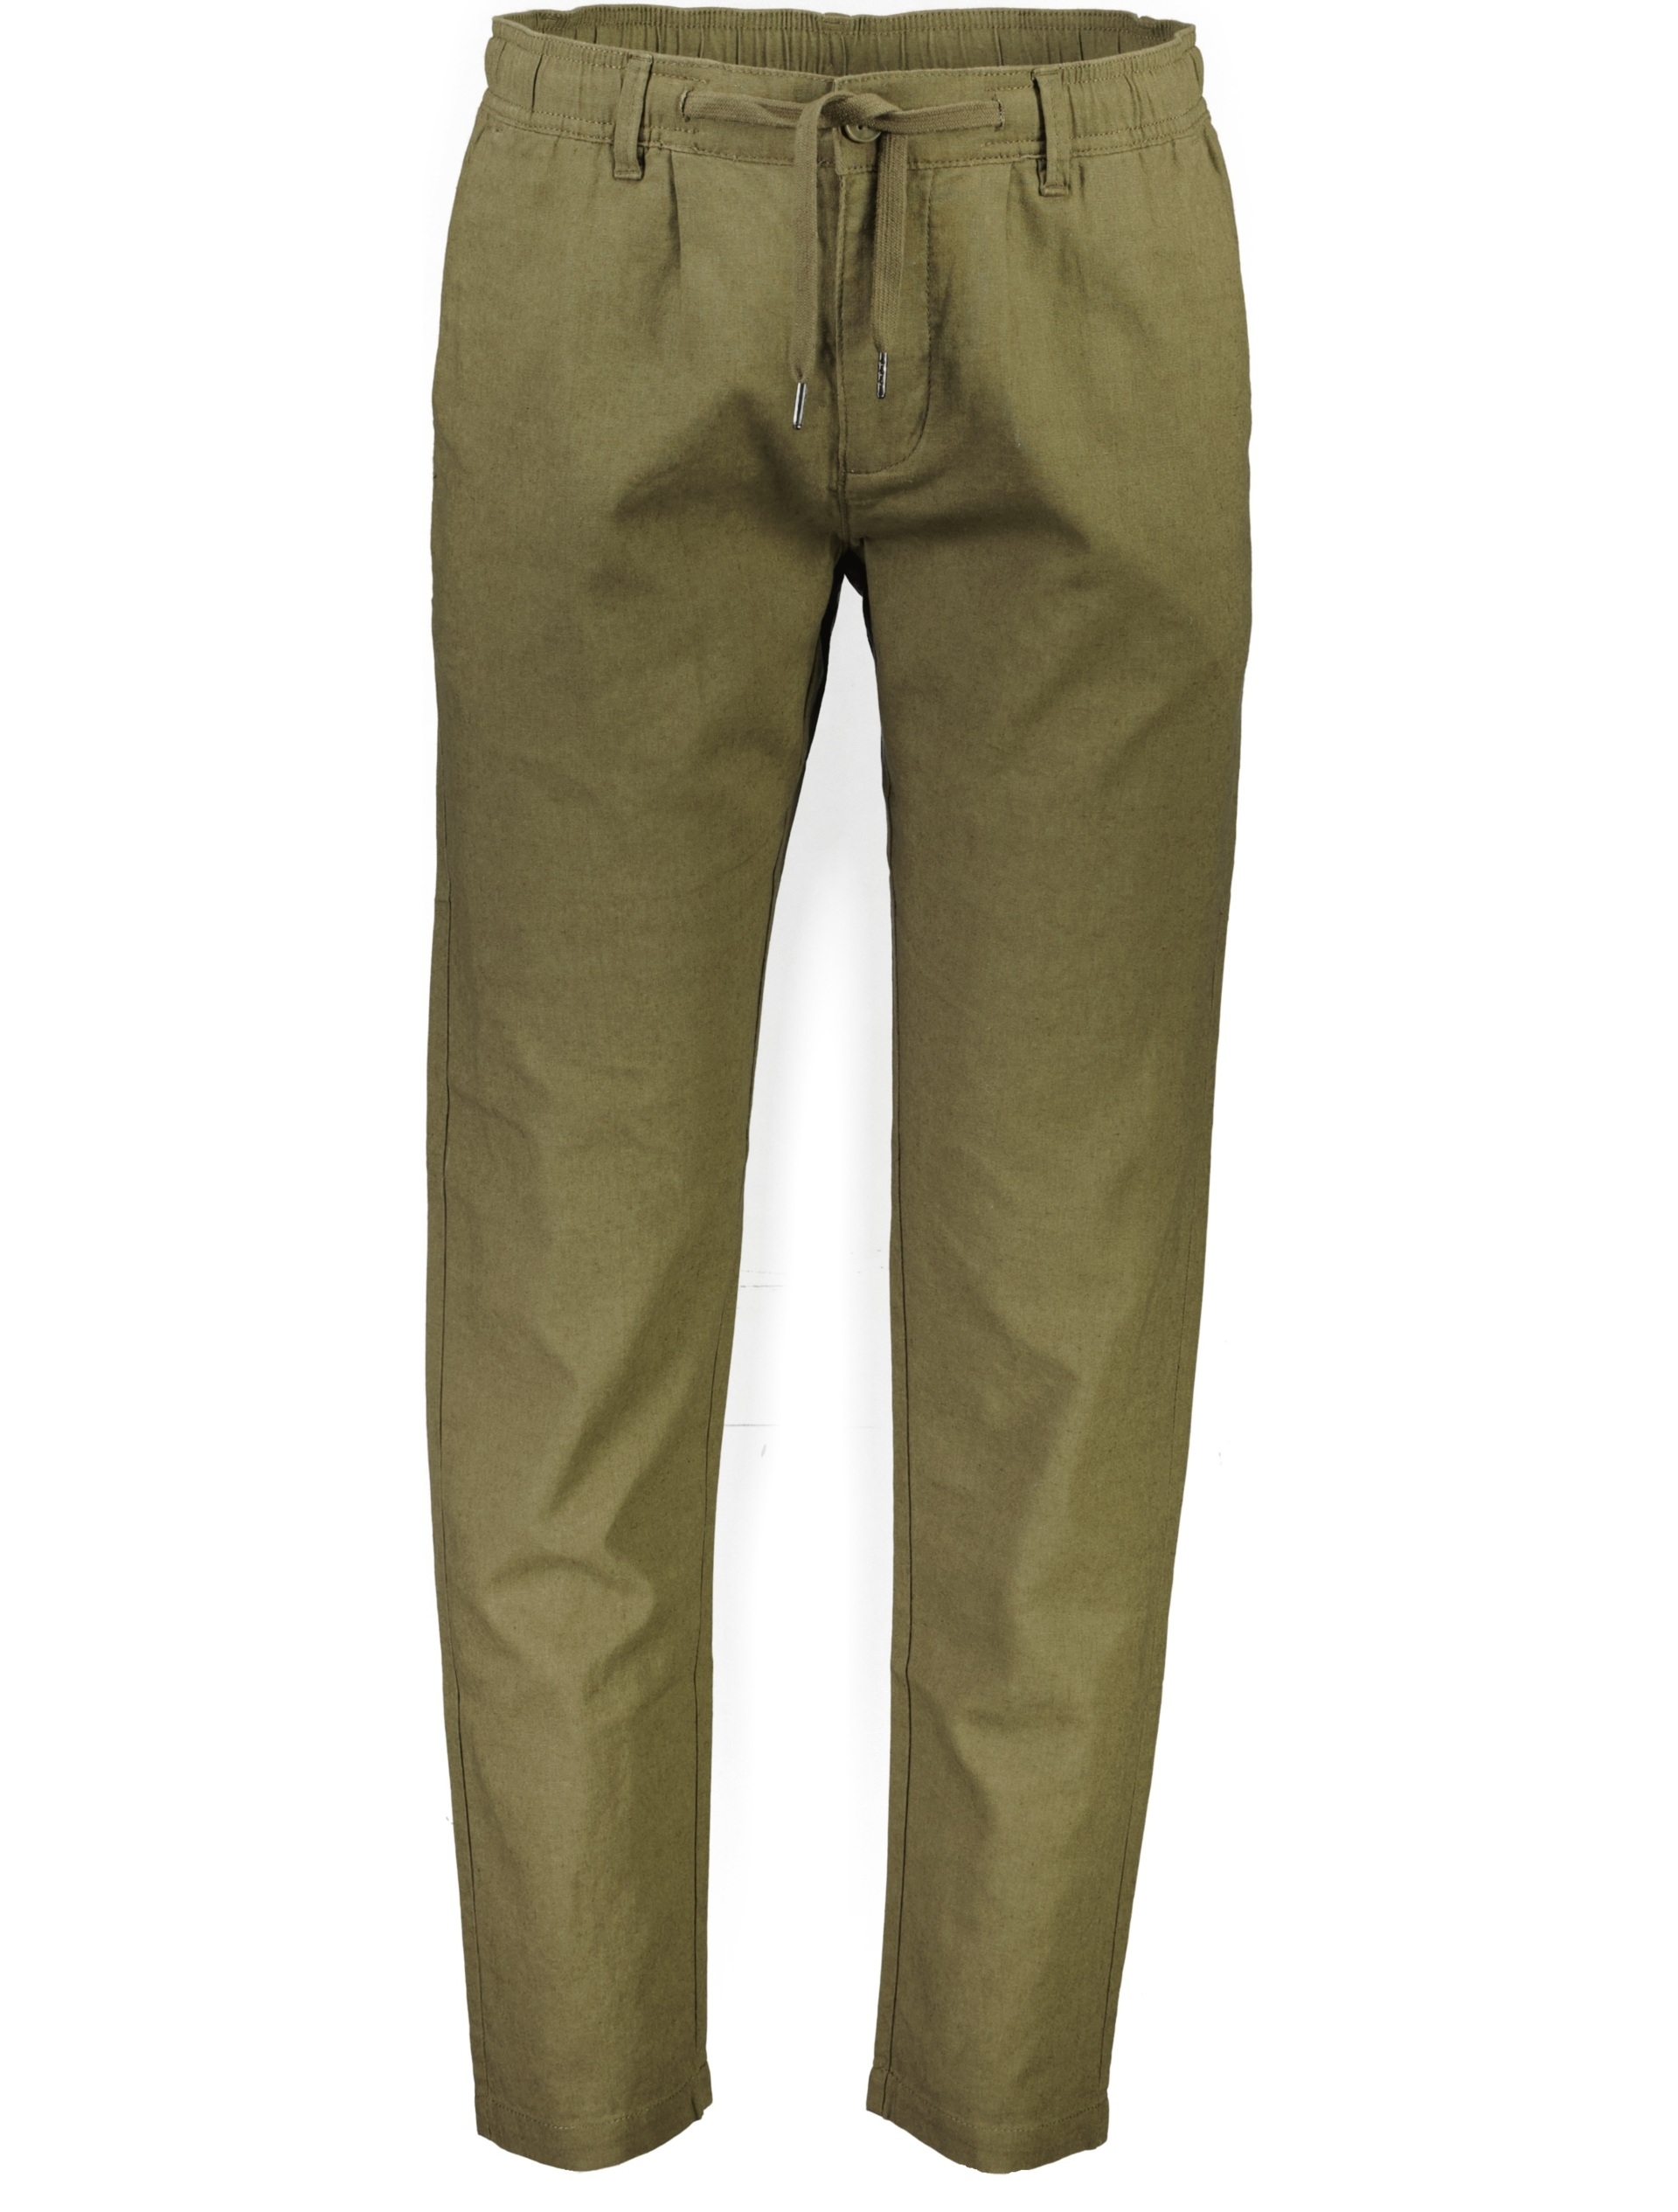 Lindbergh Linen pants green / army